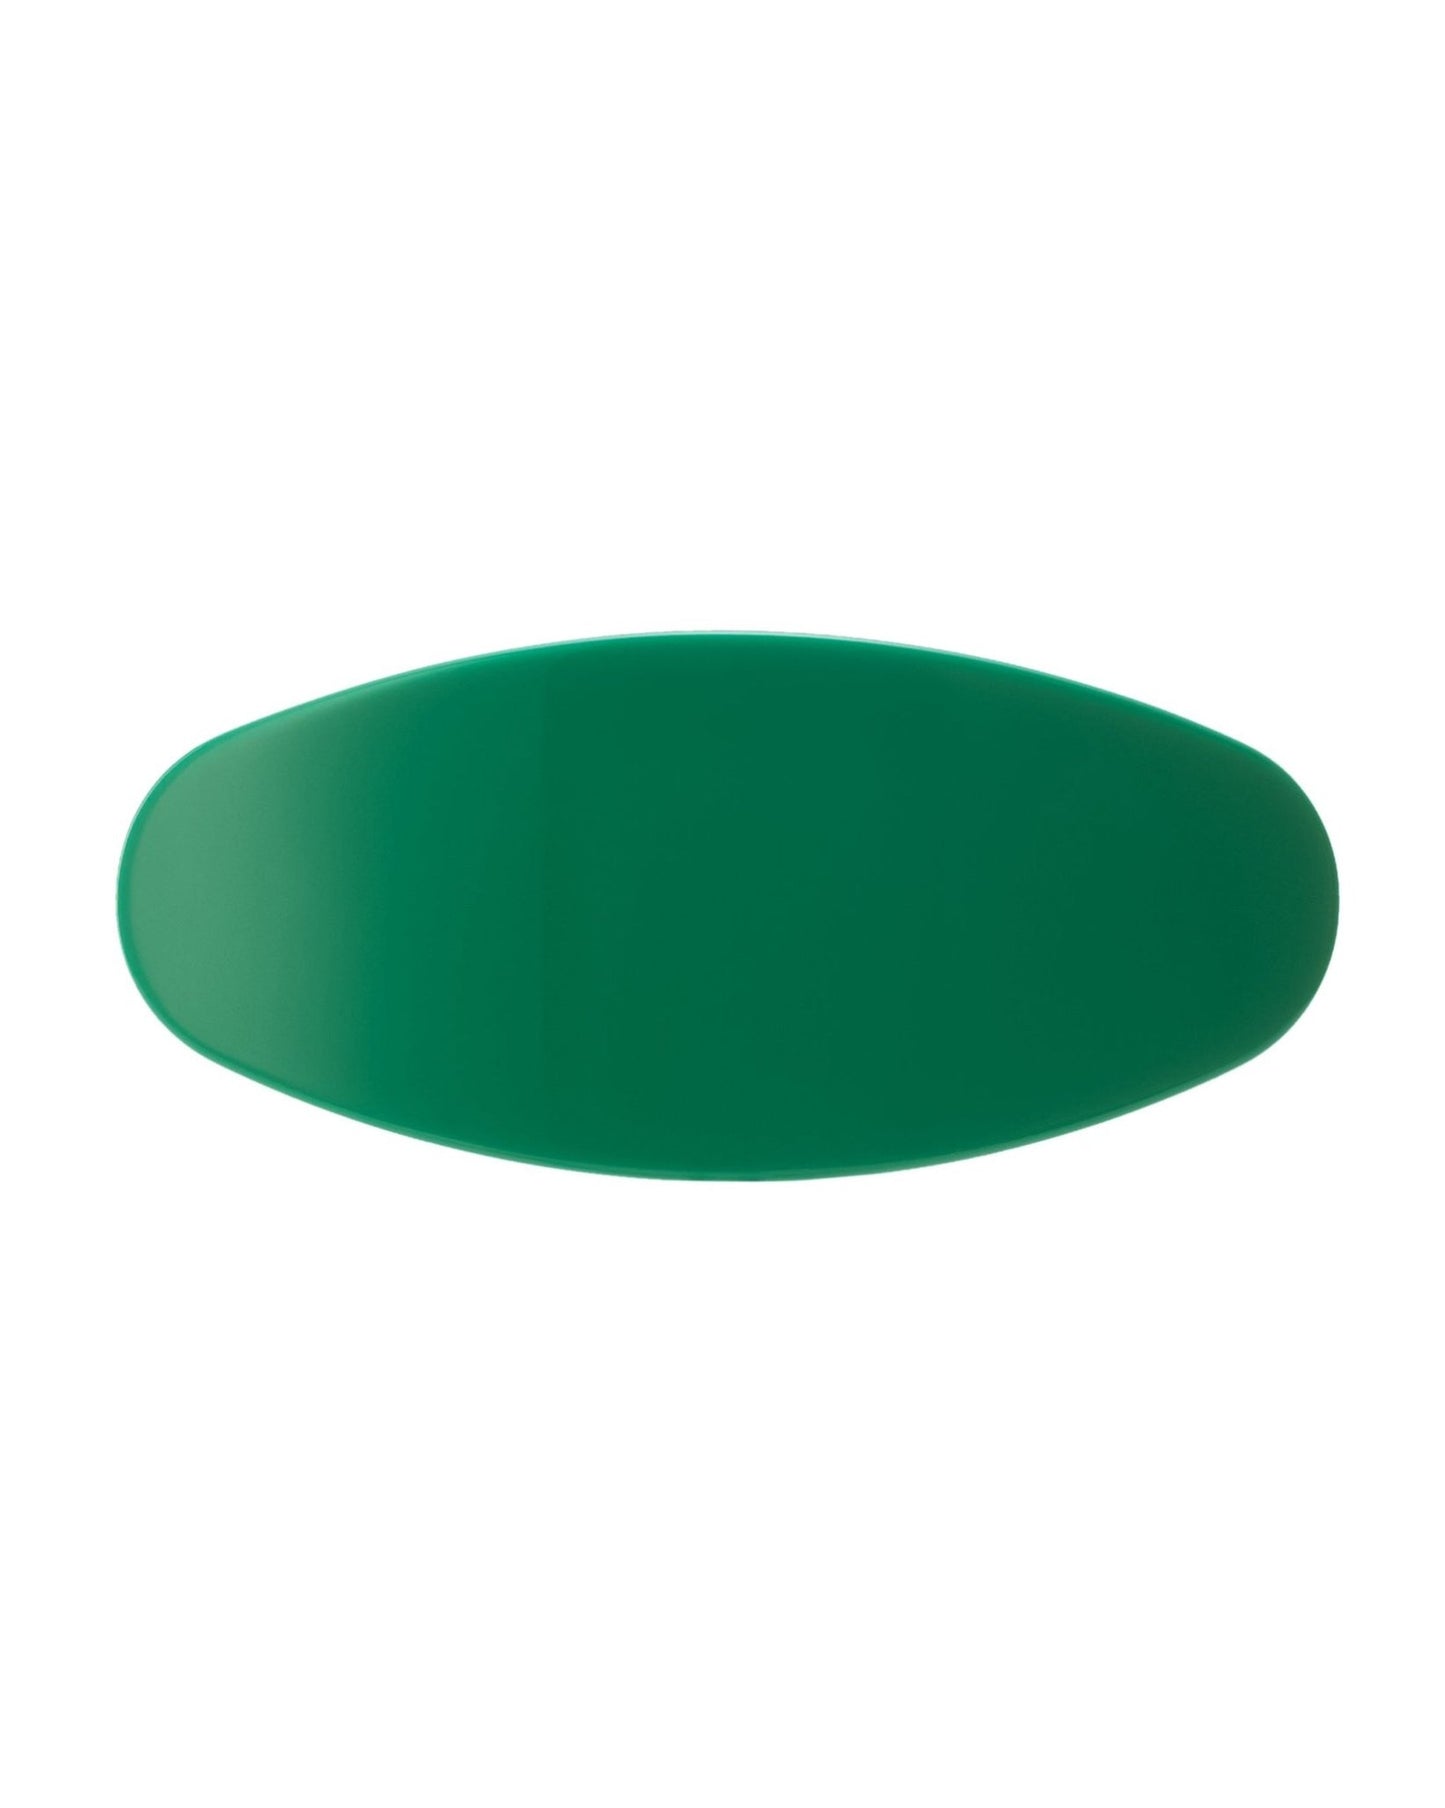 Jumbo Oval Clip in Bright Green - MACHETE